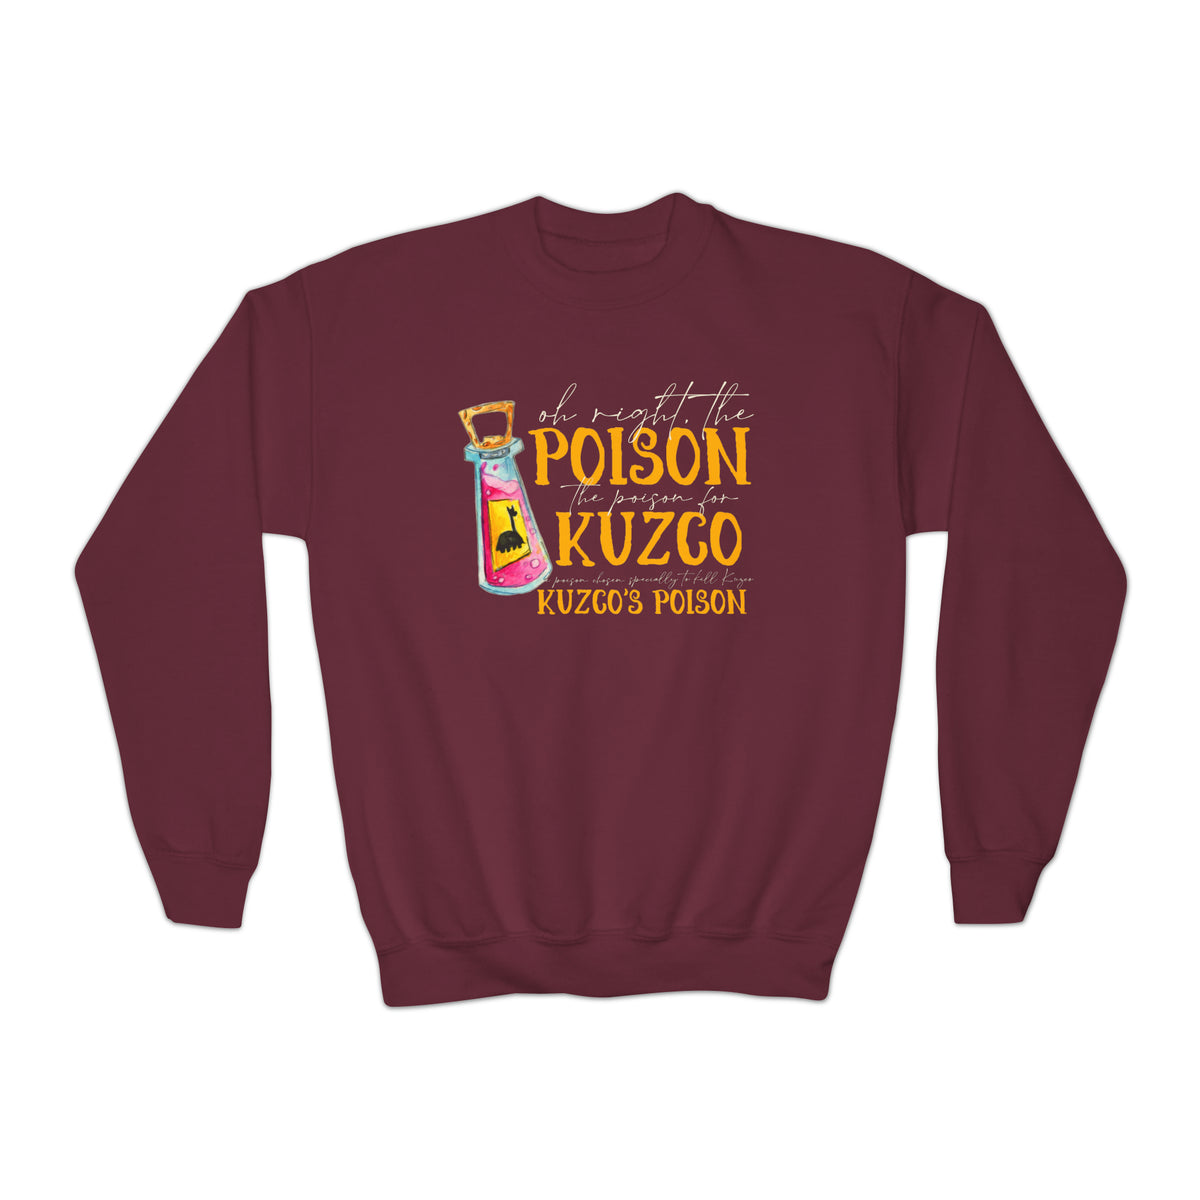 Oh Right The Poison Gildan Youth Crewneck Sweatshirt